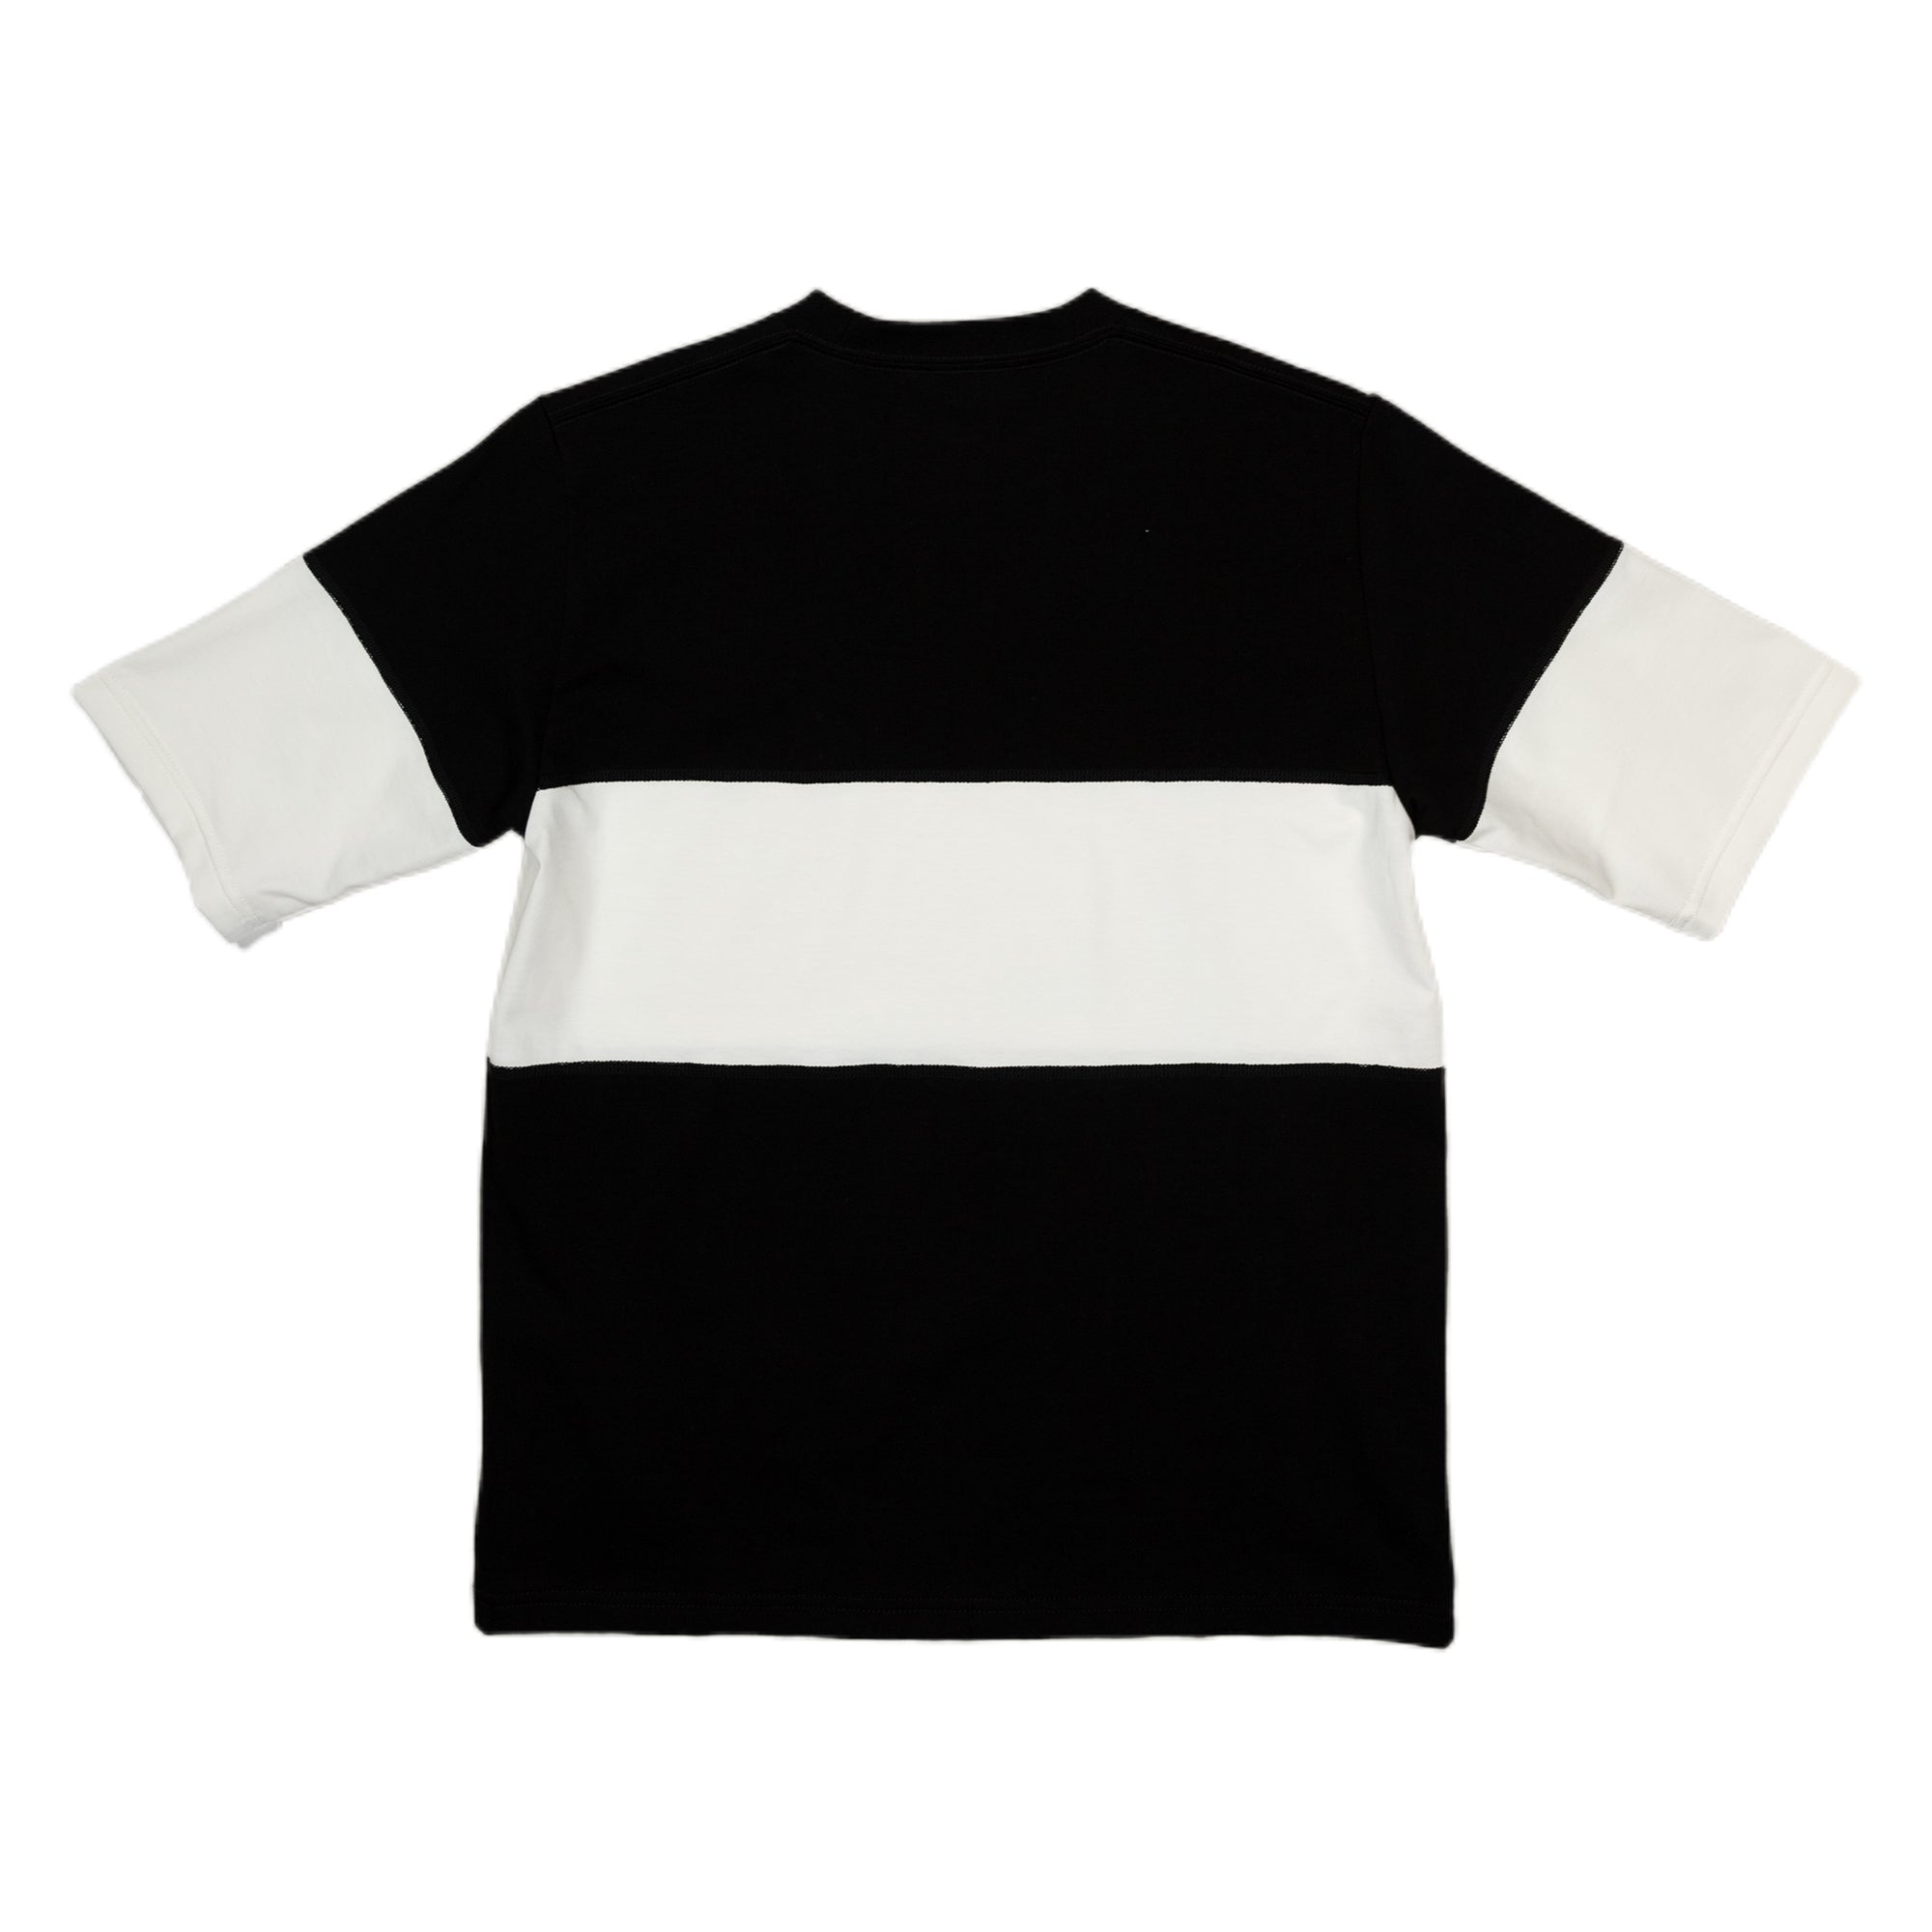 Border T-shirt One Stripe Black / White - Wallace Mercantile Shop